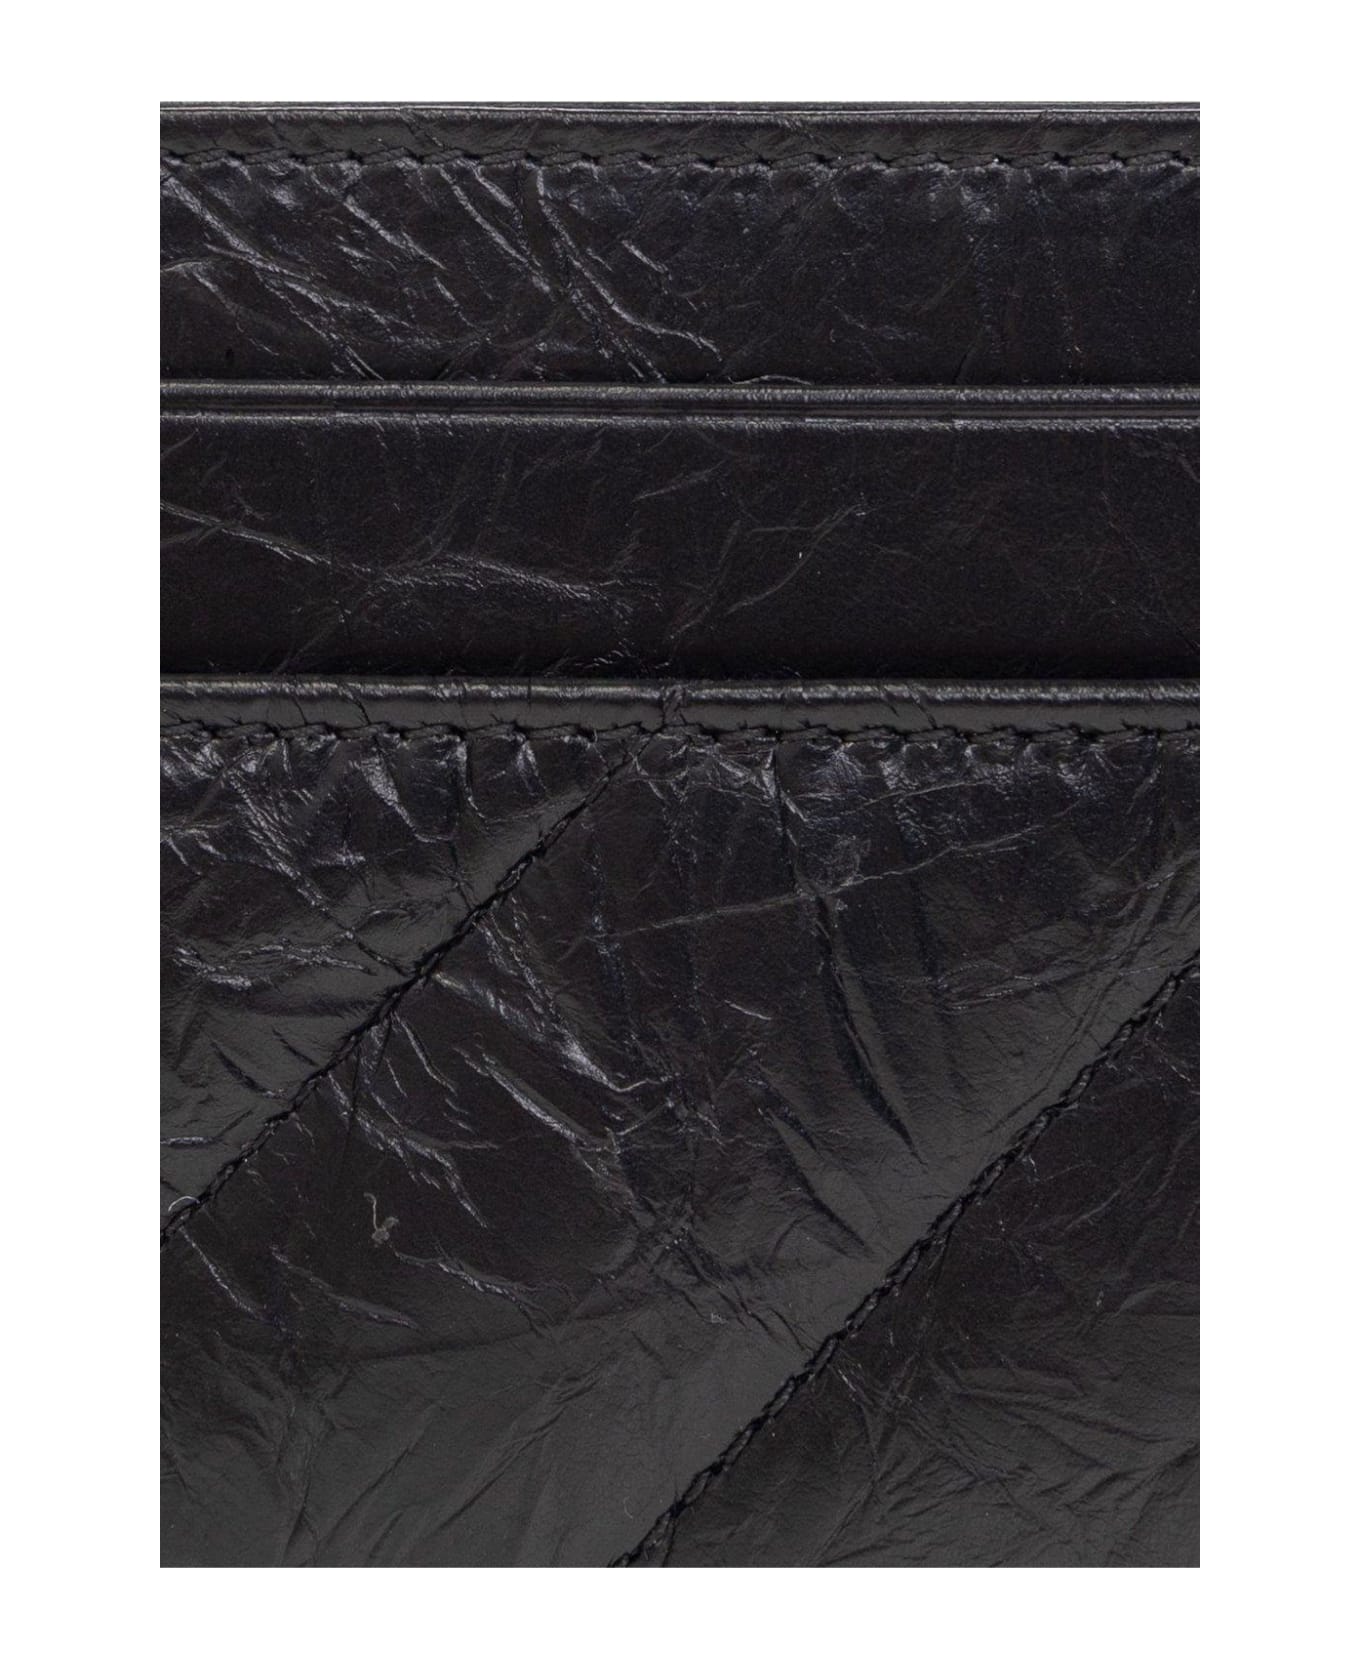 Balenciaga Logo Plaque Quilted Cardholder - Black